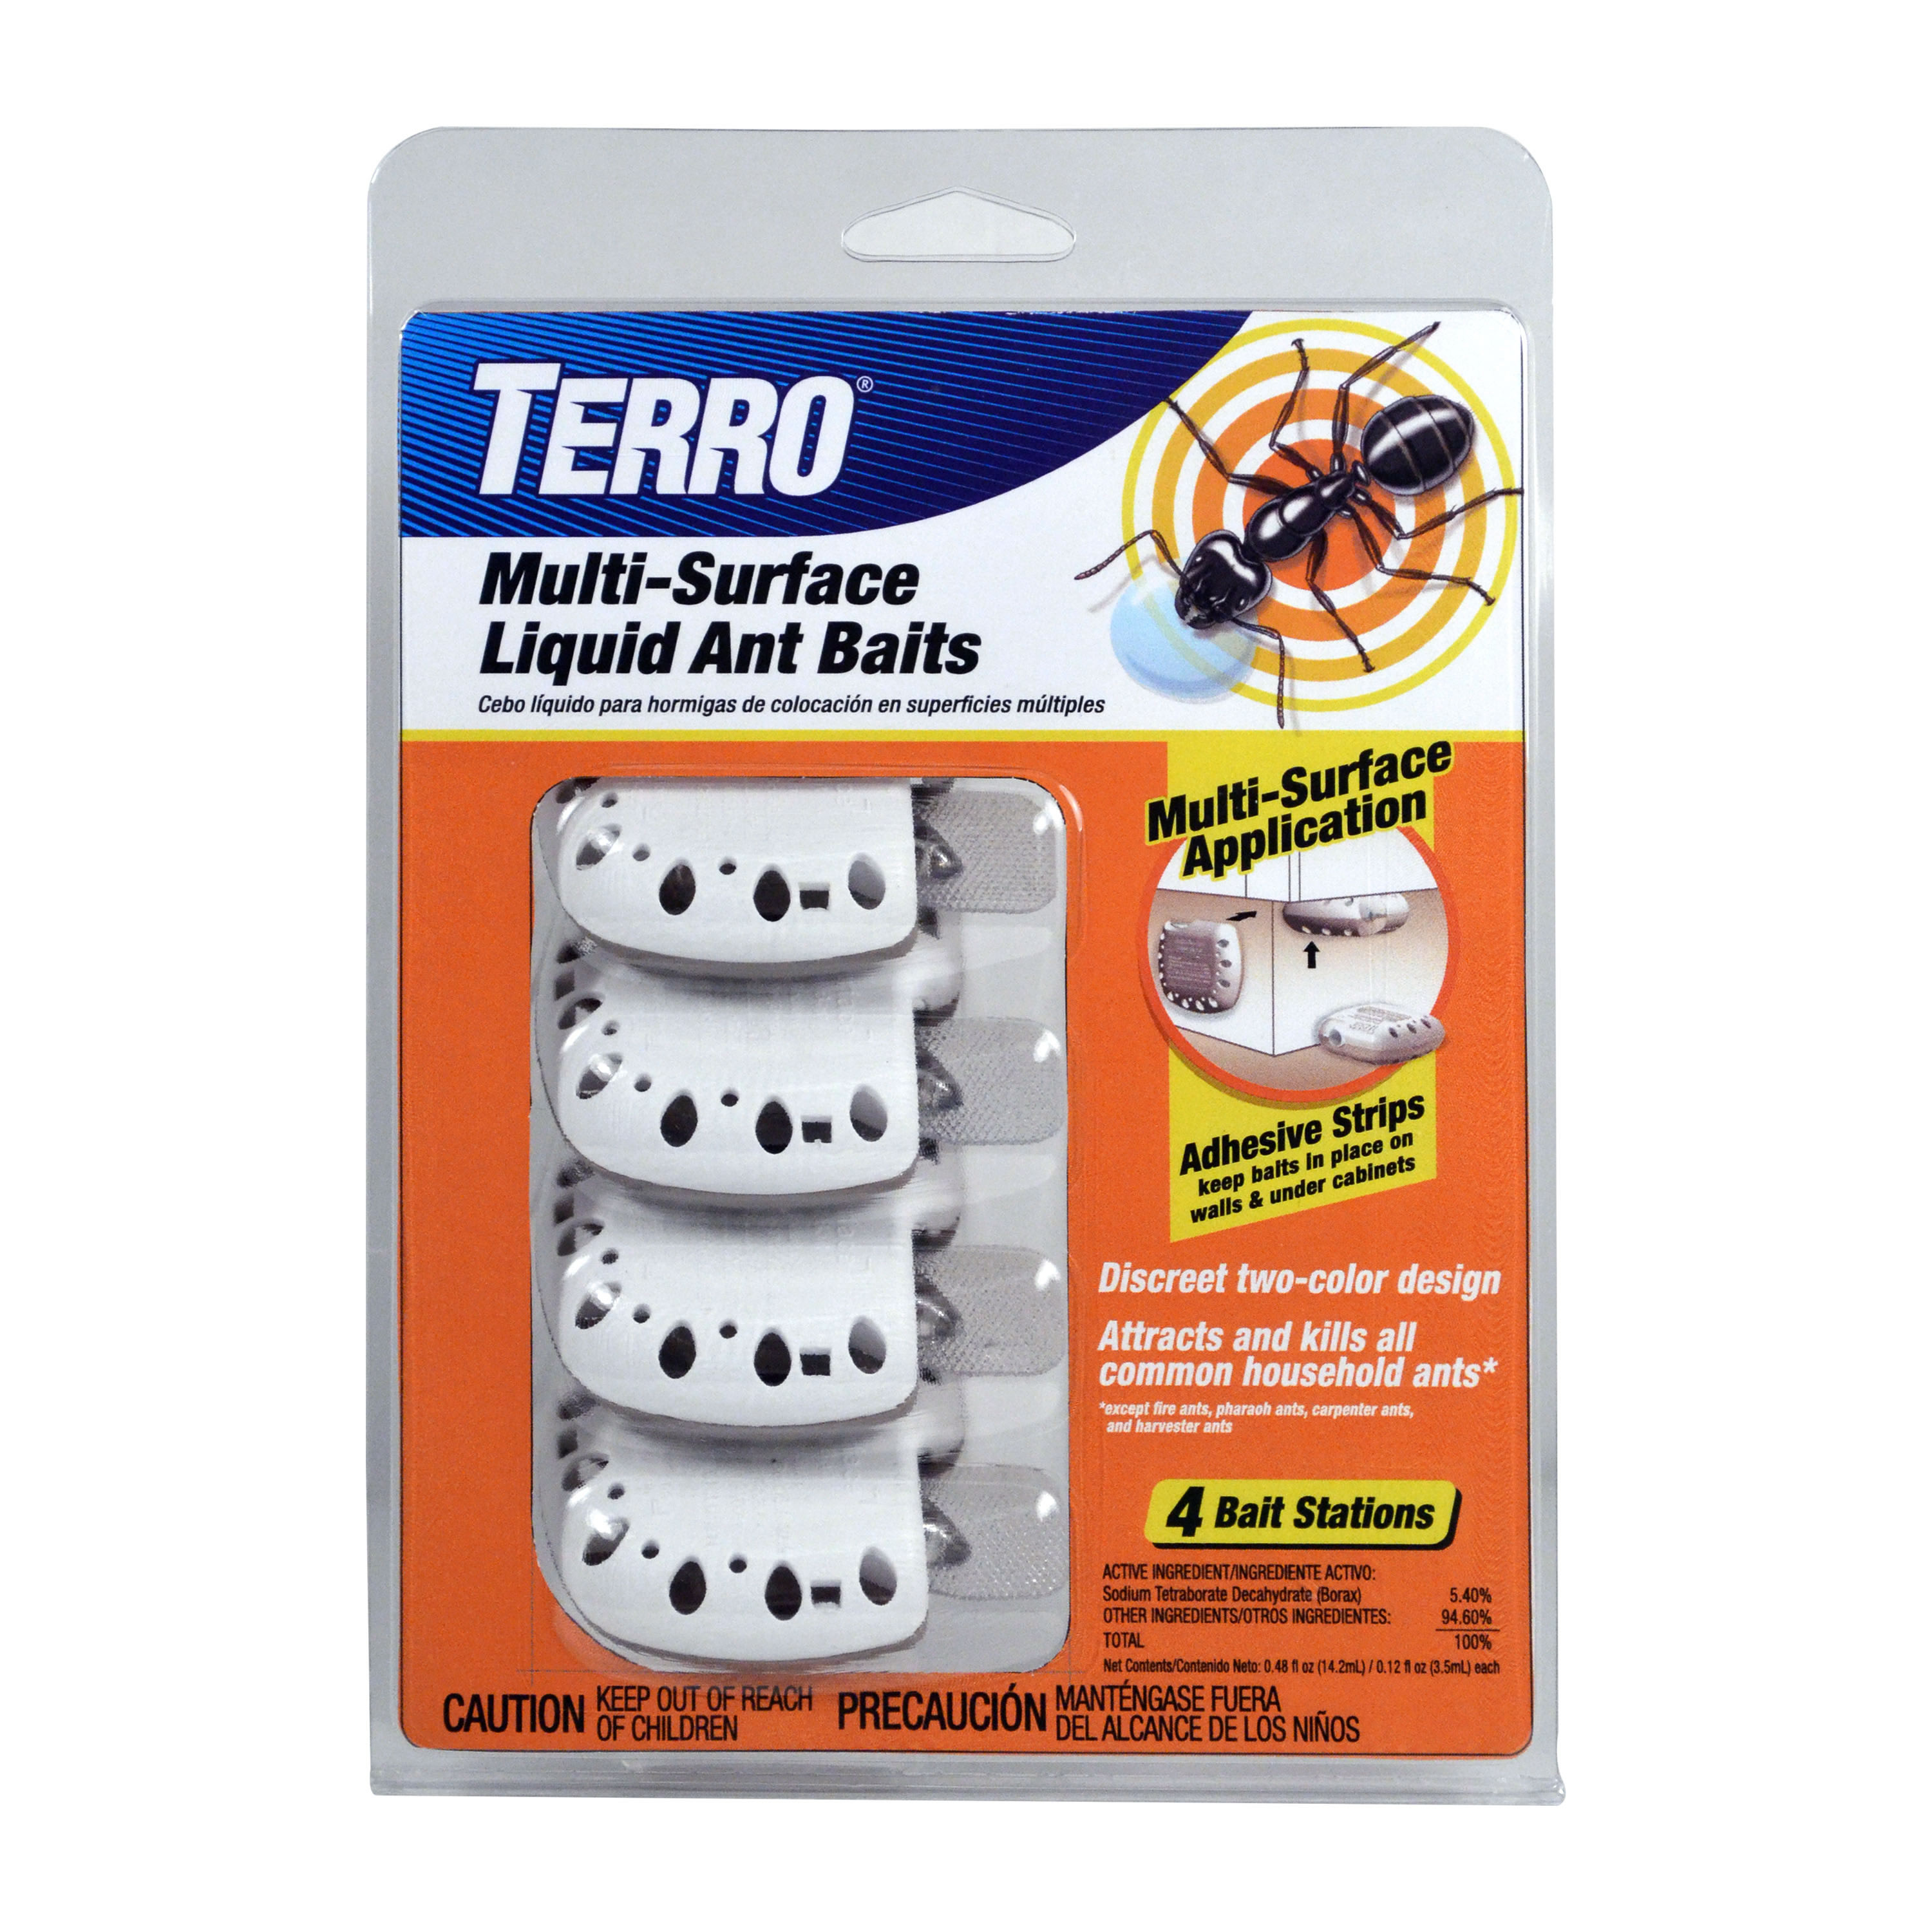 TERRO Multi-Surface Liquid Ant Baits 4 Discreet Bait Stations - image 1 of 10